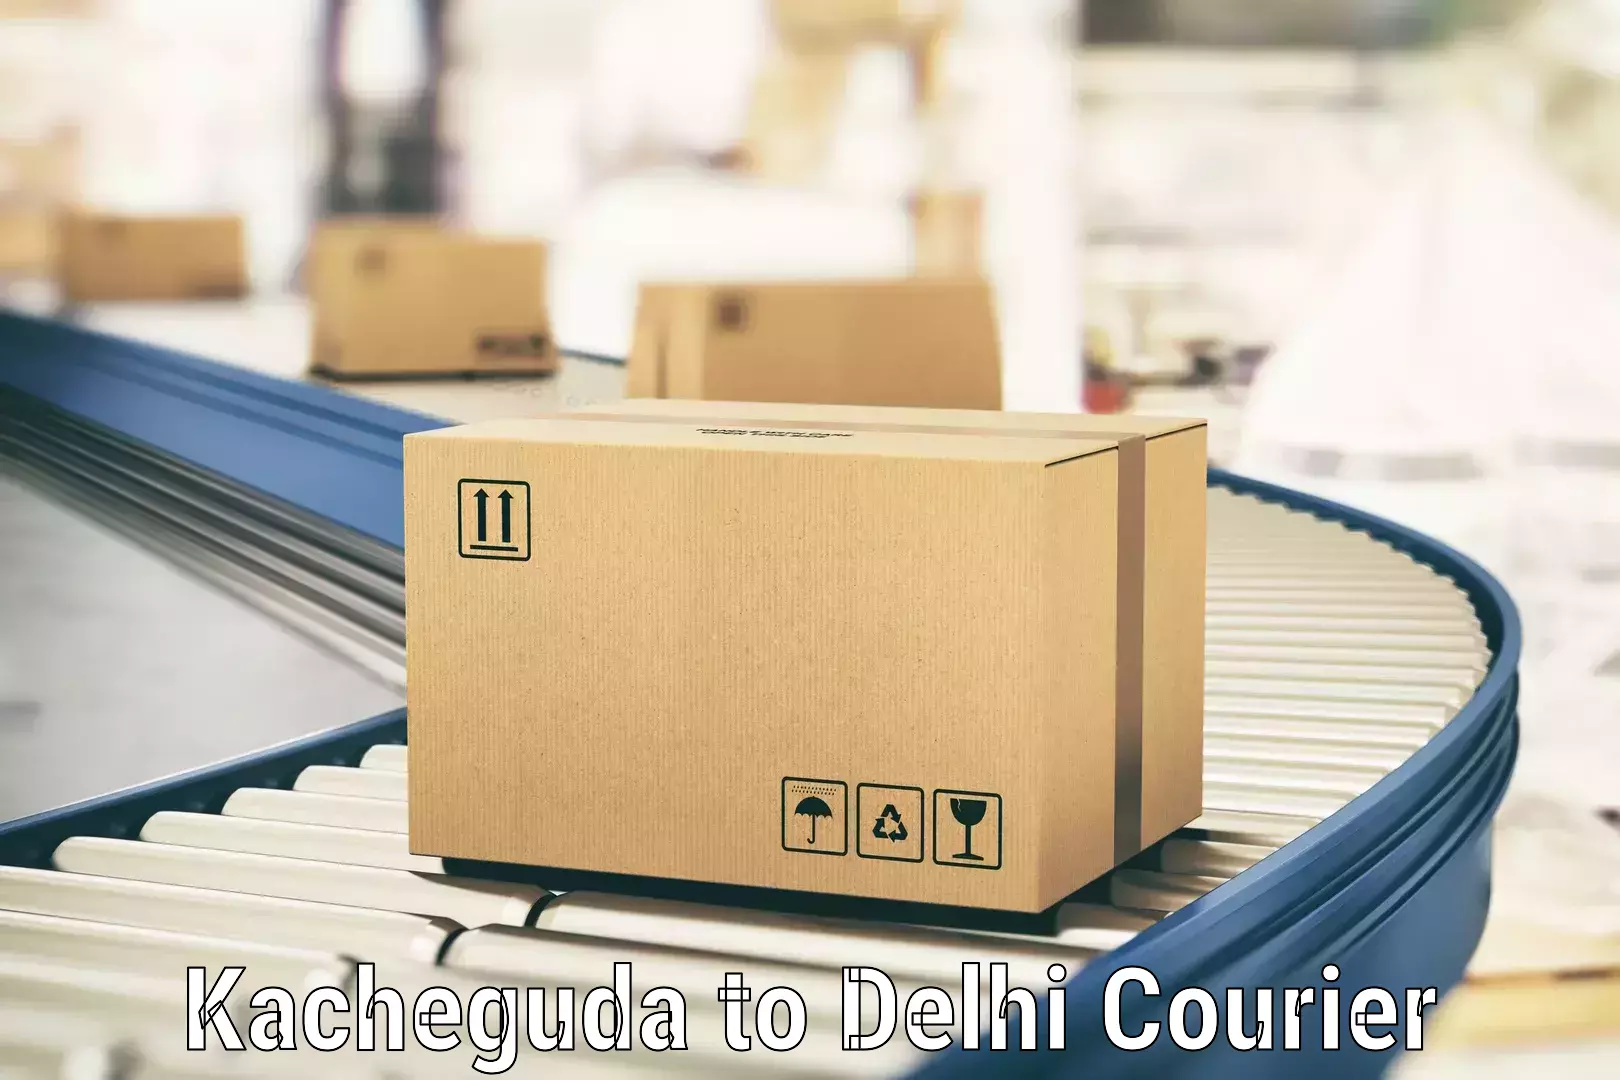 Courier service partnerships Kacheguda to NCR